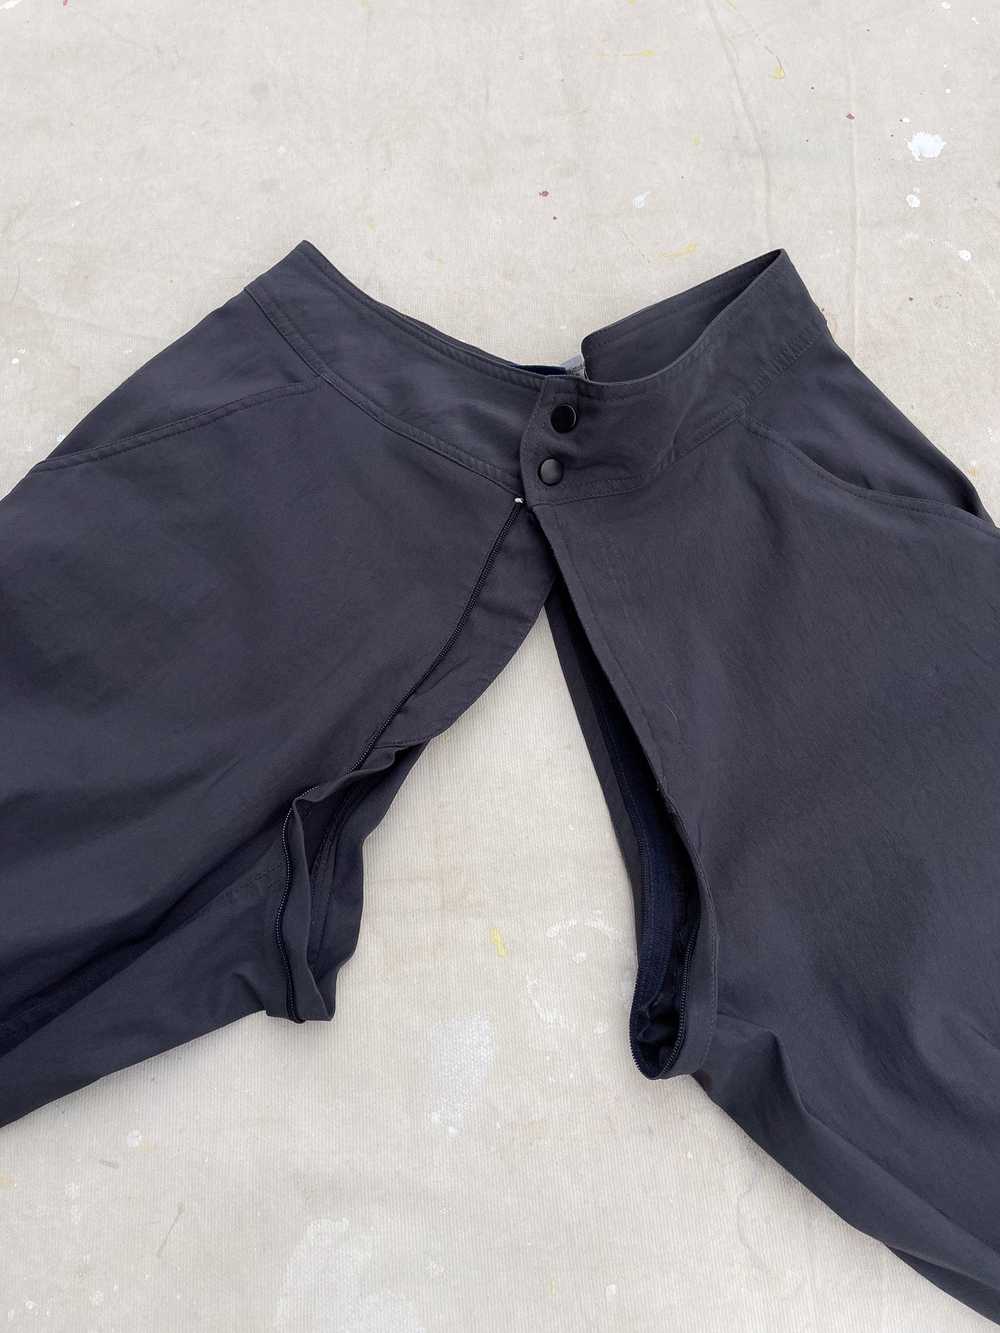 Isis Full Crotch Zip Tech Pants—[28x31] - image 5